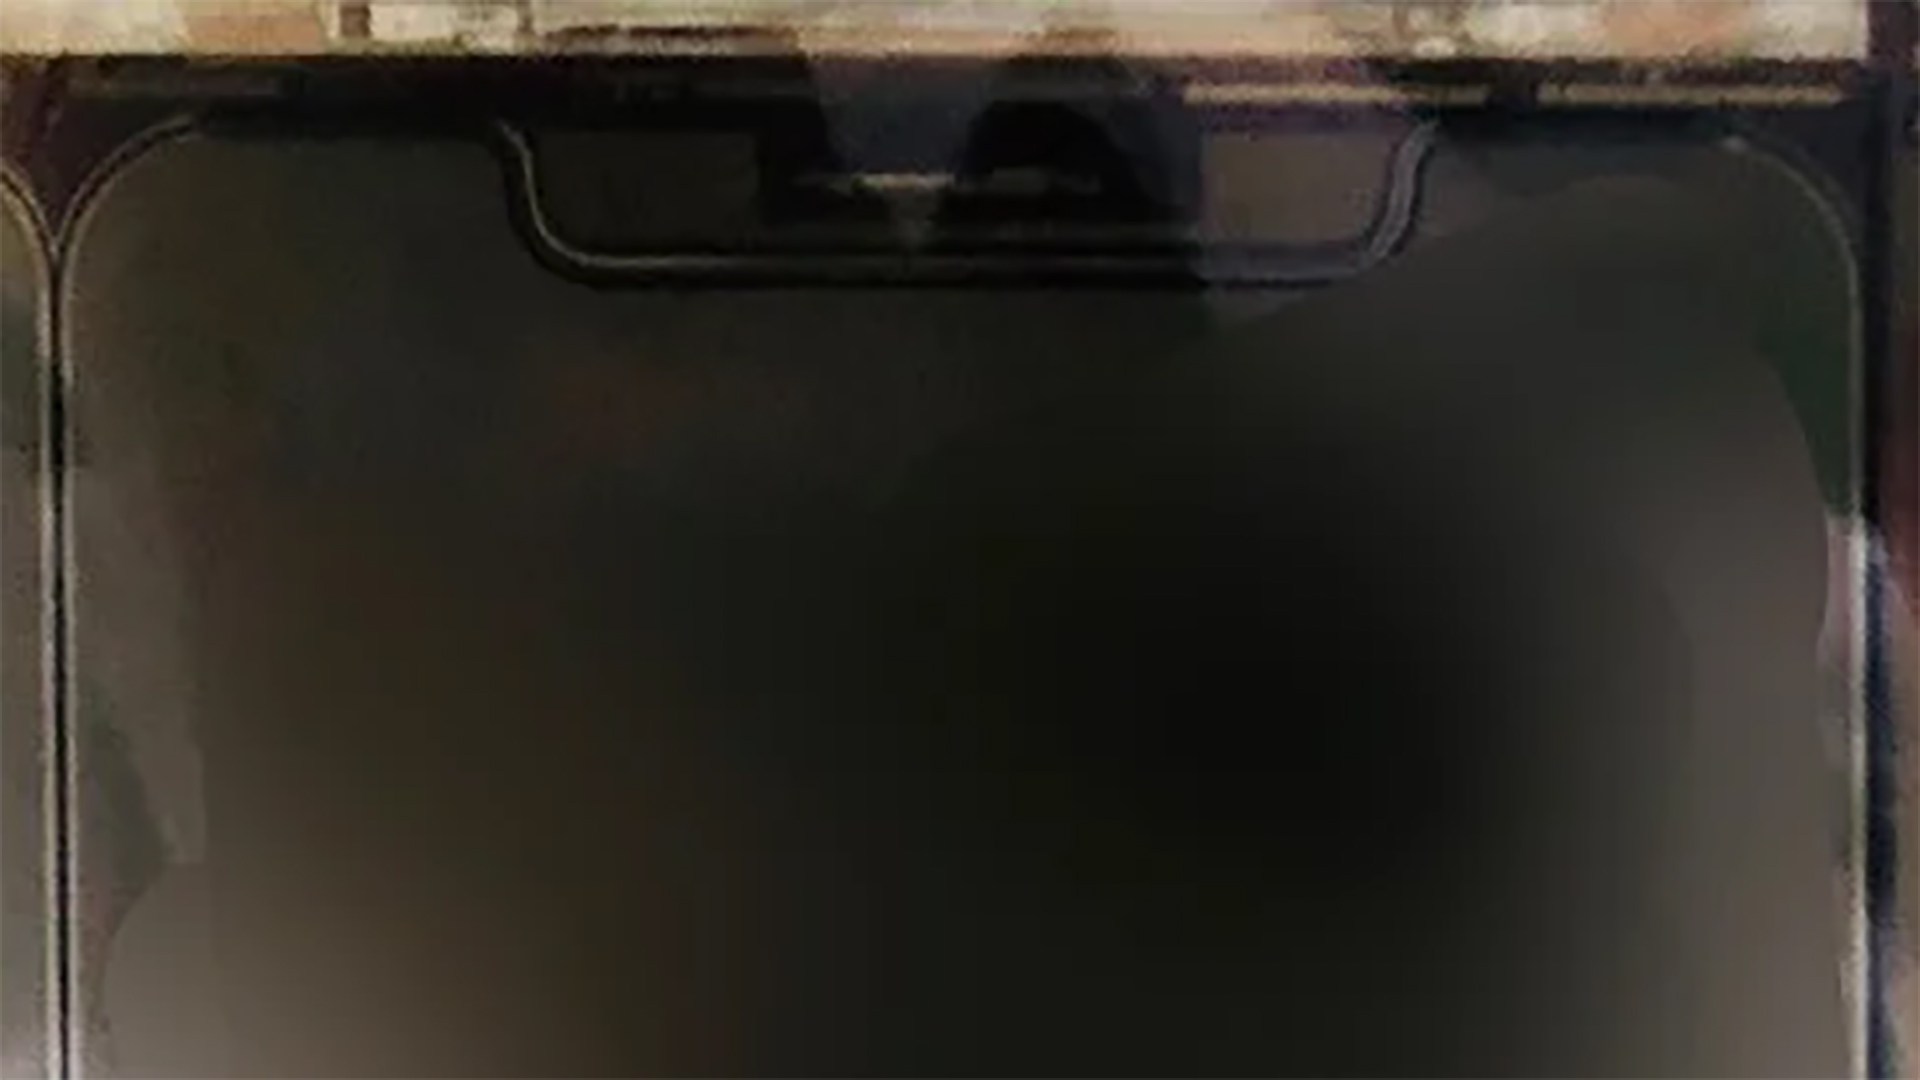 iPhone 12 Display Panel Leak